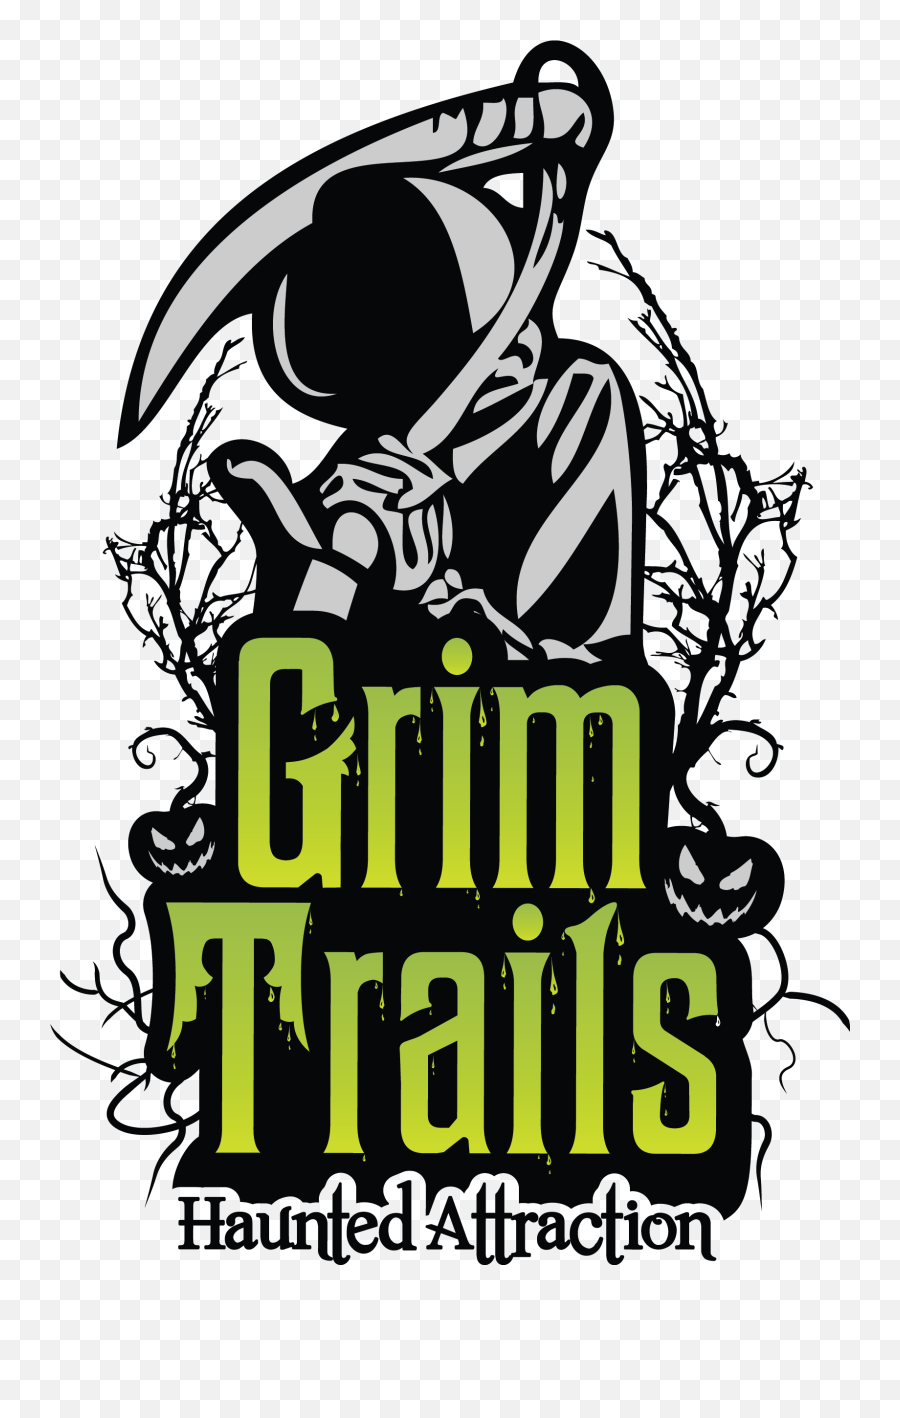 Grim Trails Haunted House And Attractions Louisville Kyu0027s - Grim Trails Emoji,Haunted Mansion Logo